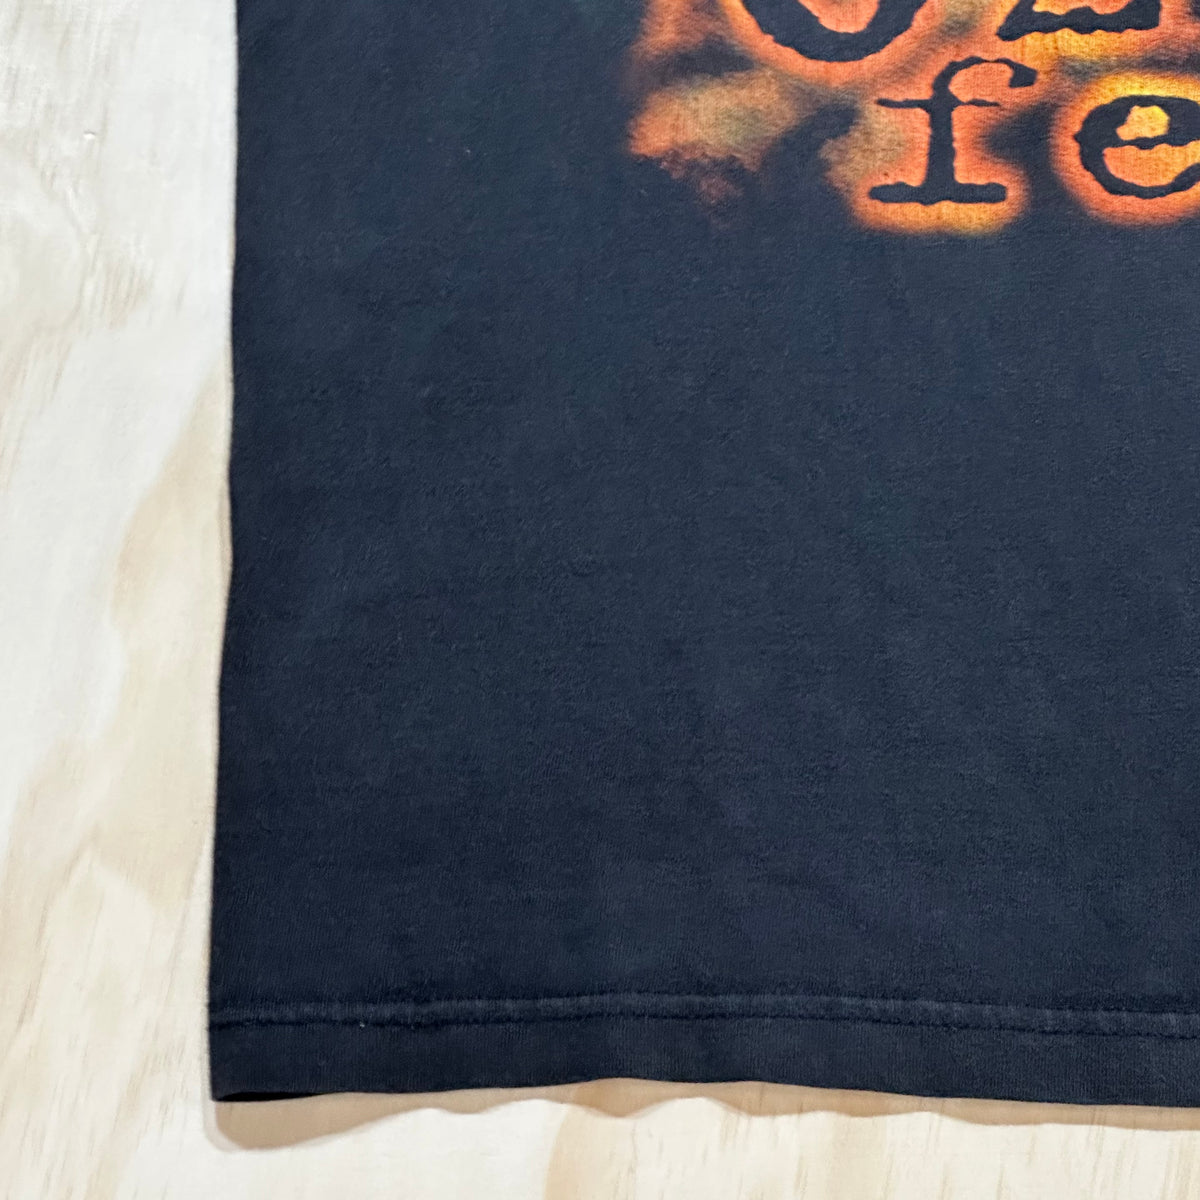 1996 Vintage The Ozz Fest Ozzy Osbourne tour shirt